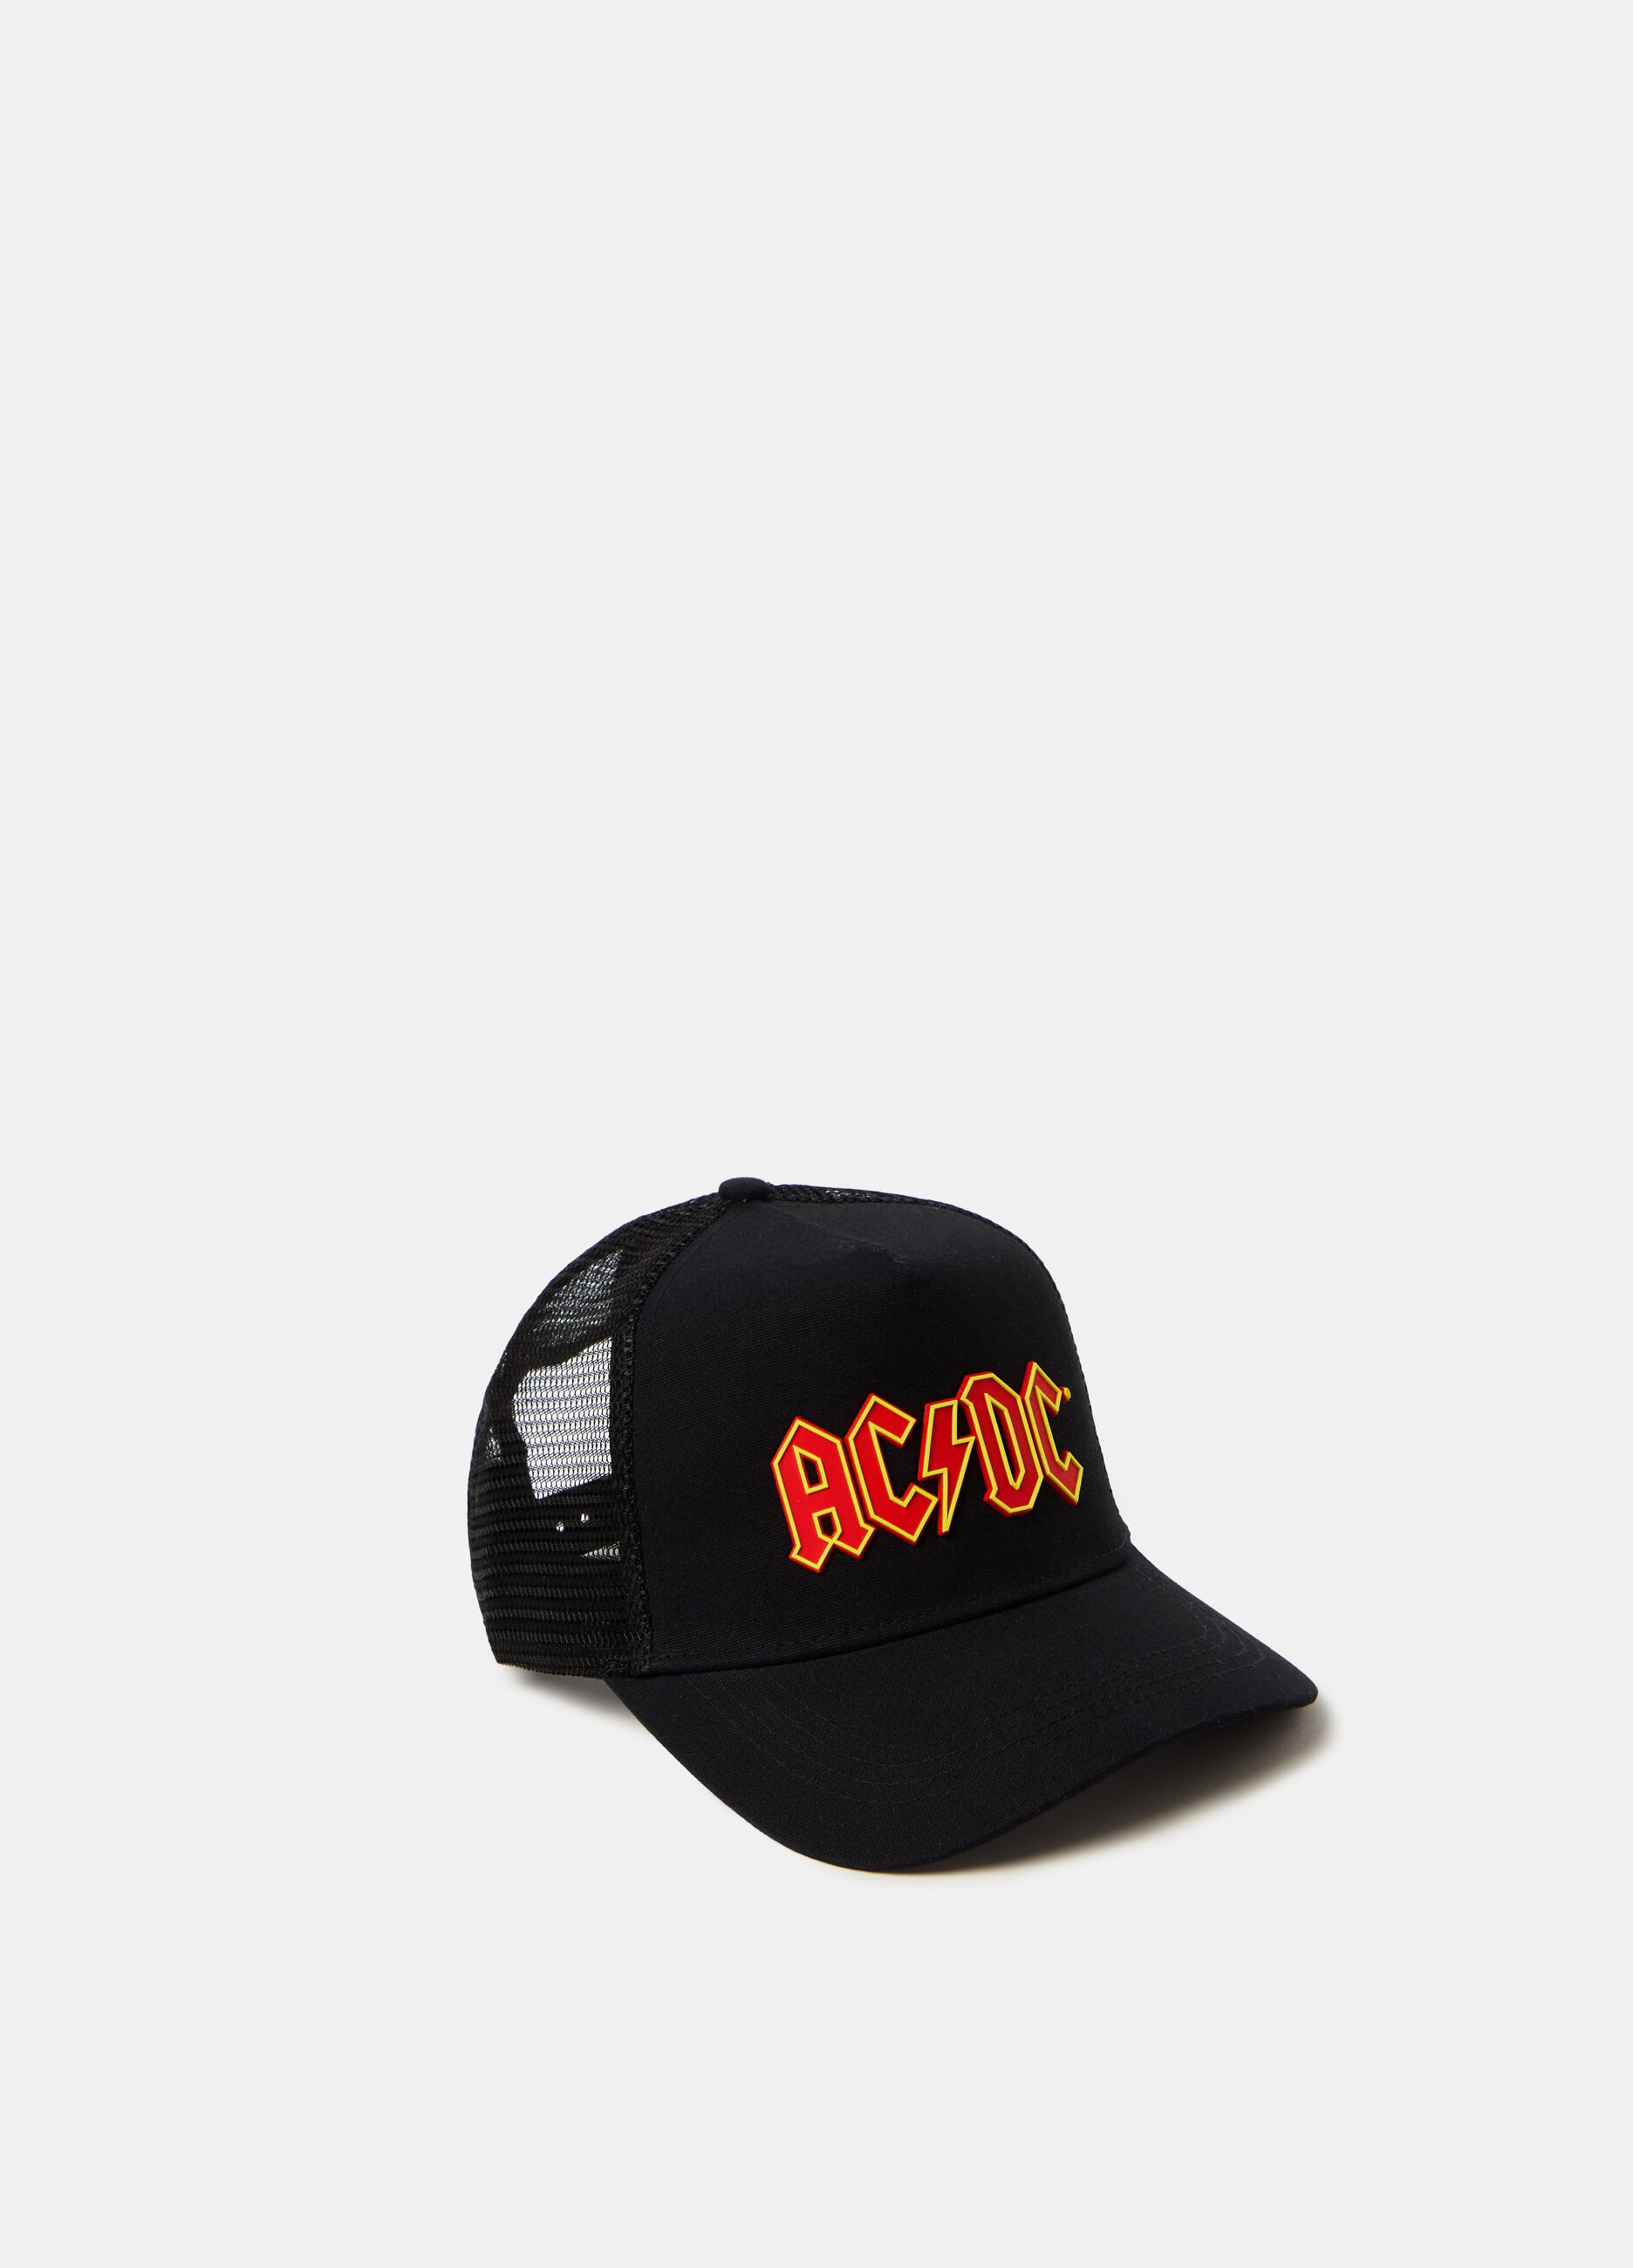 Baseball cap with AC/DC logo